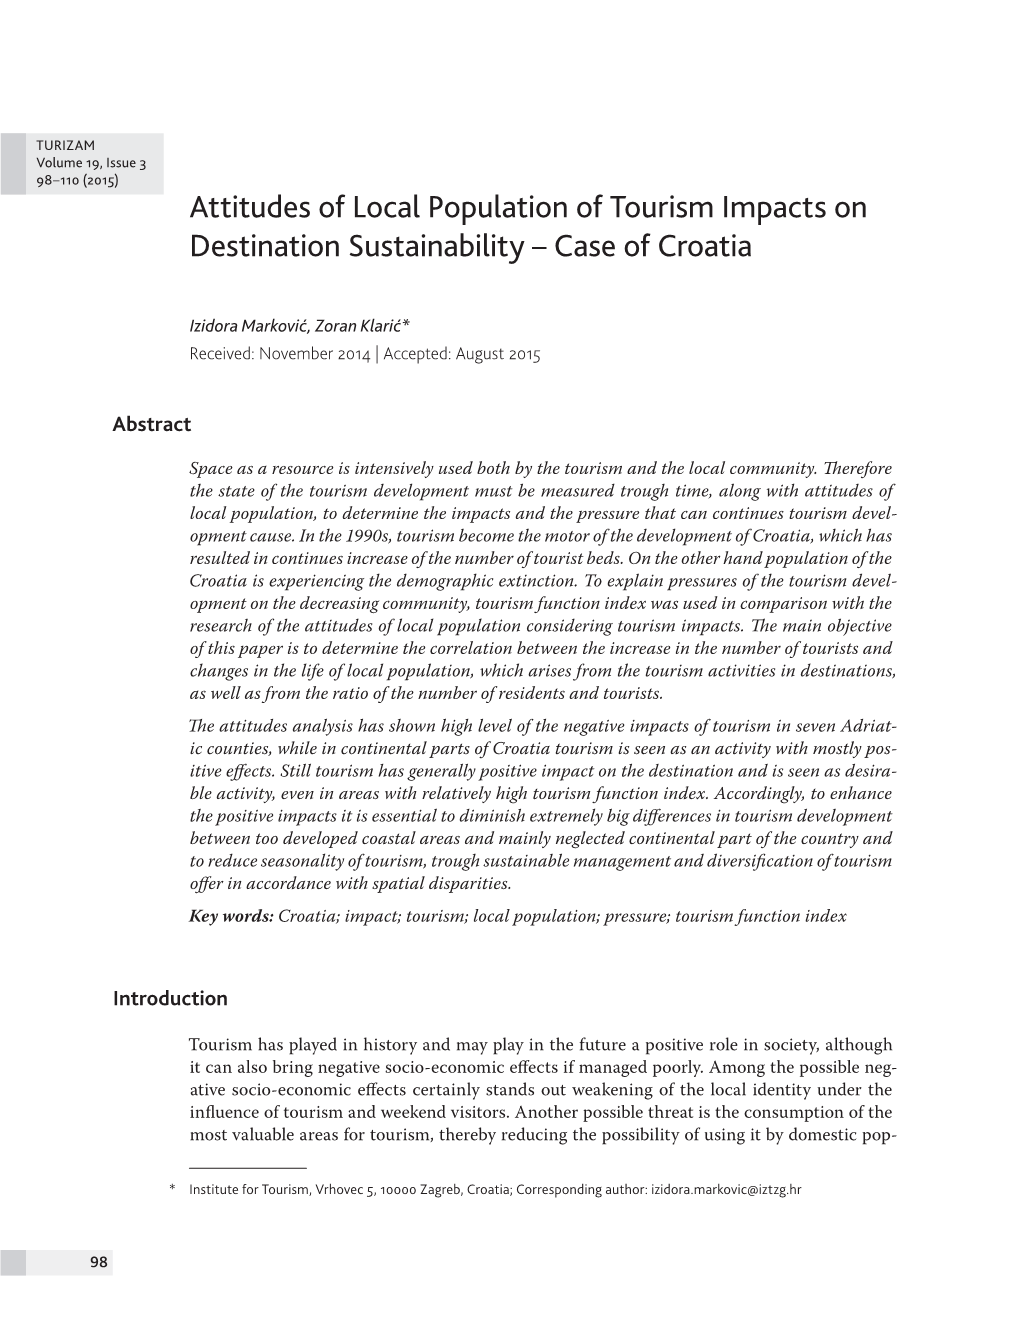 Attitudes of Local Population of Tourism Impacts on Destination Sustainability – Case of Croatia